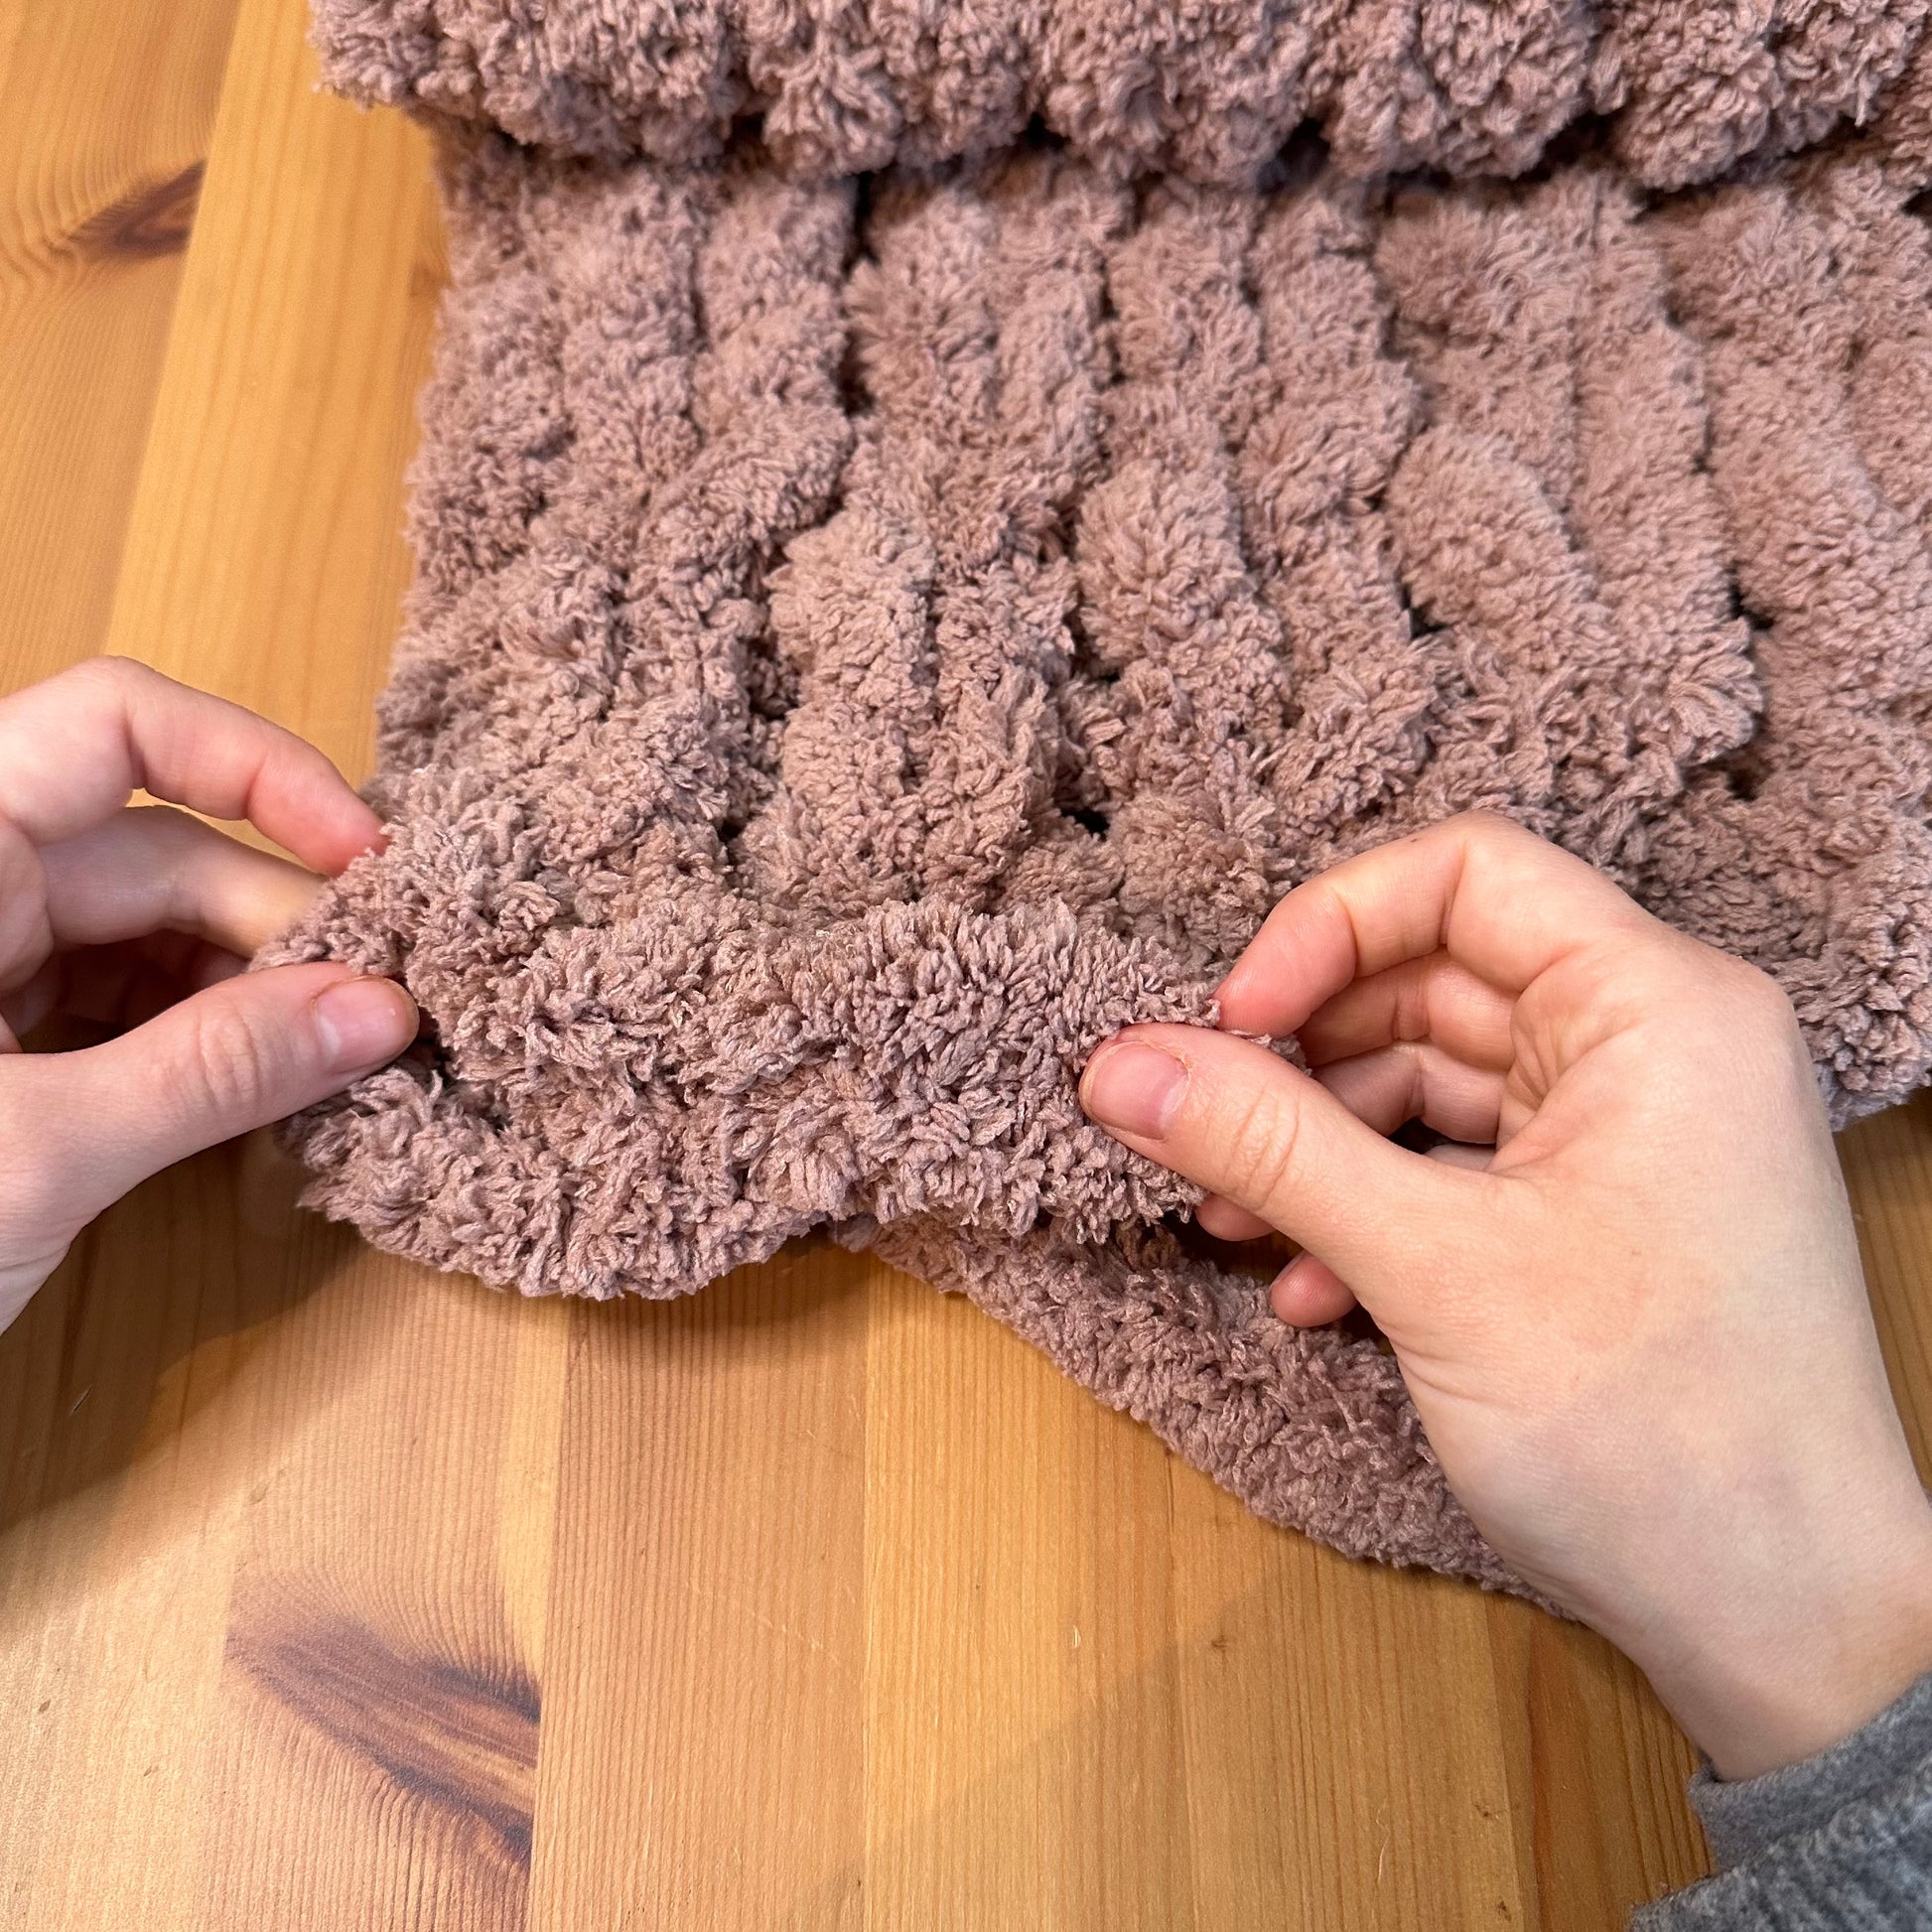 DIY Chenille Chunky Knit Blanket Tutorial - WatersHaus